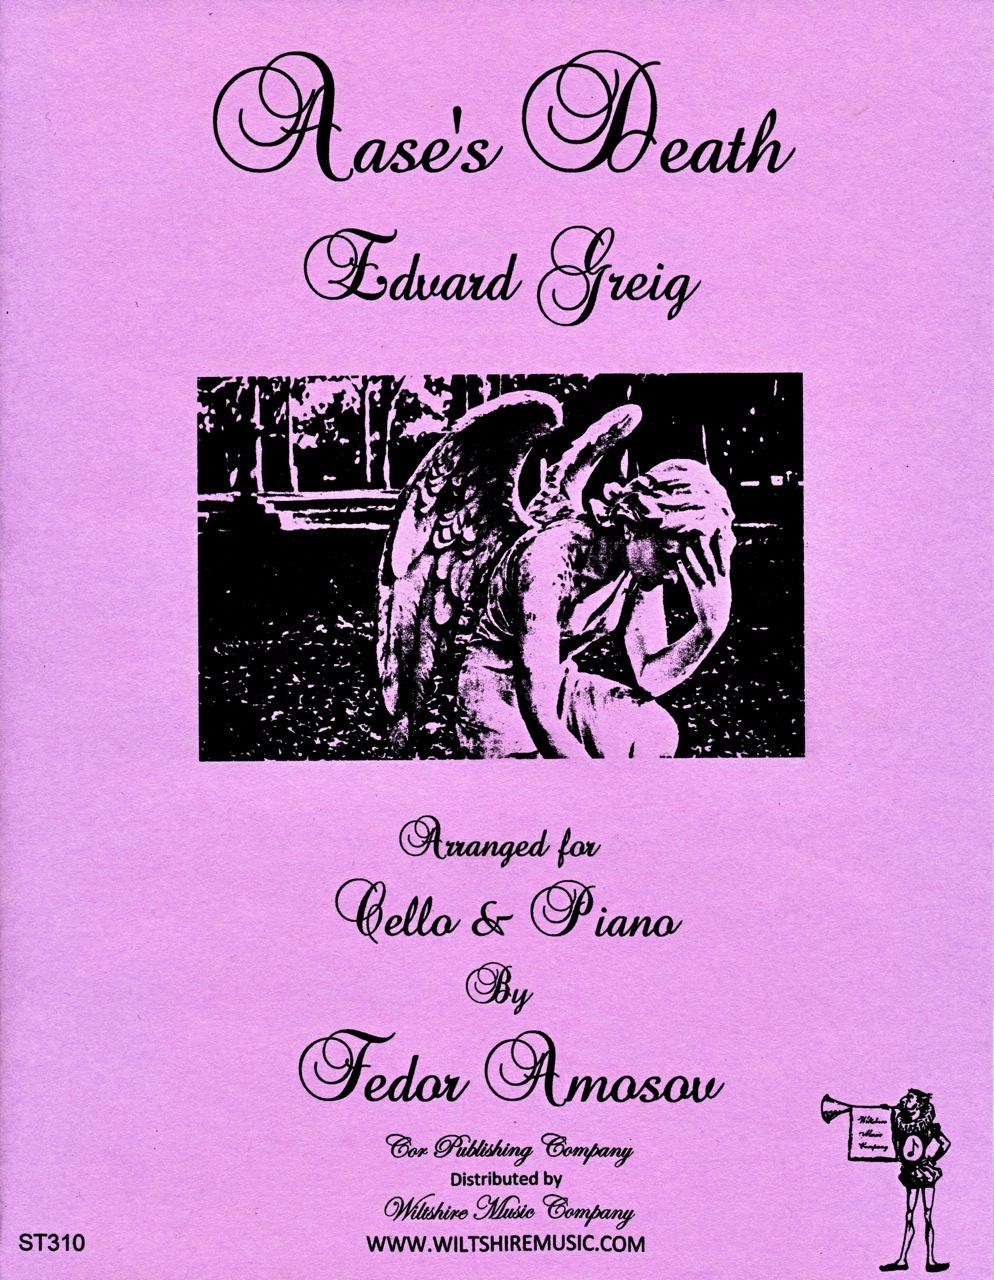 Aase's Death, Edvard Grieg (Amosov) cello & piano